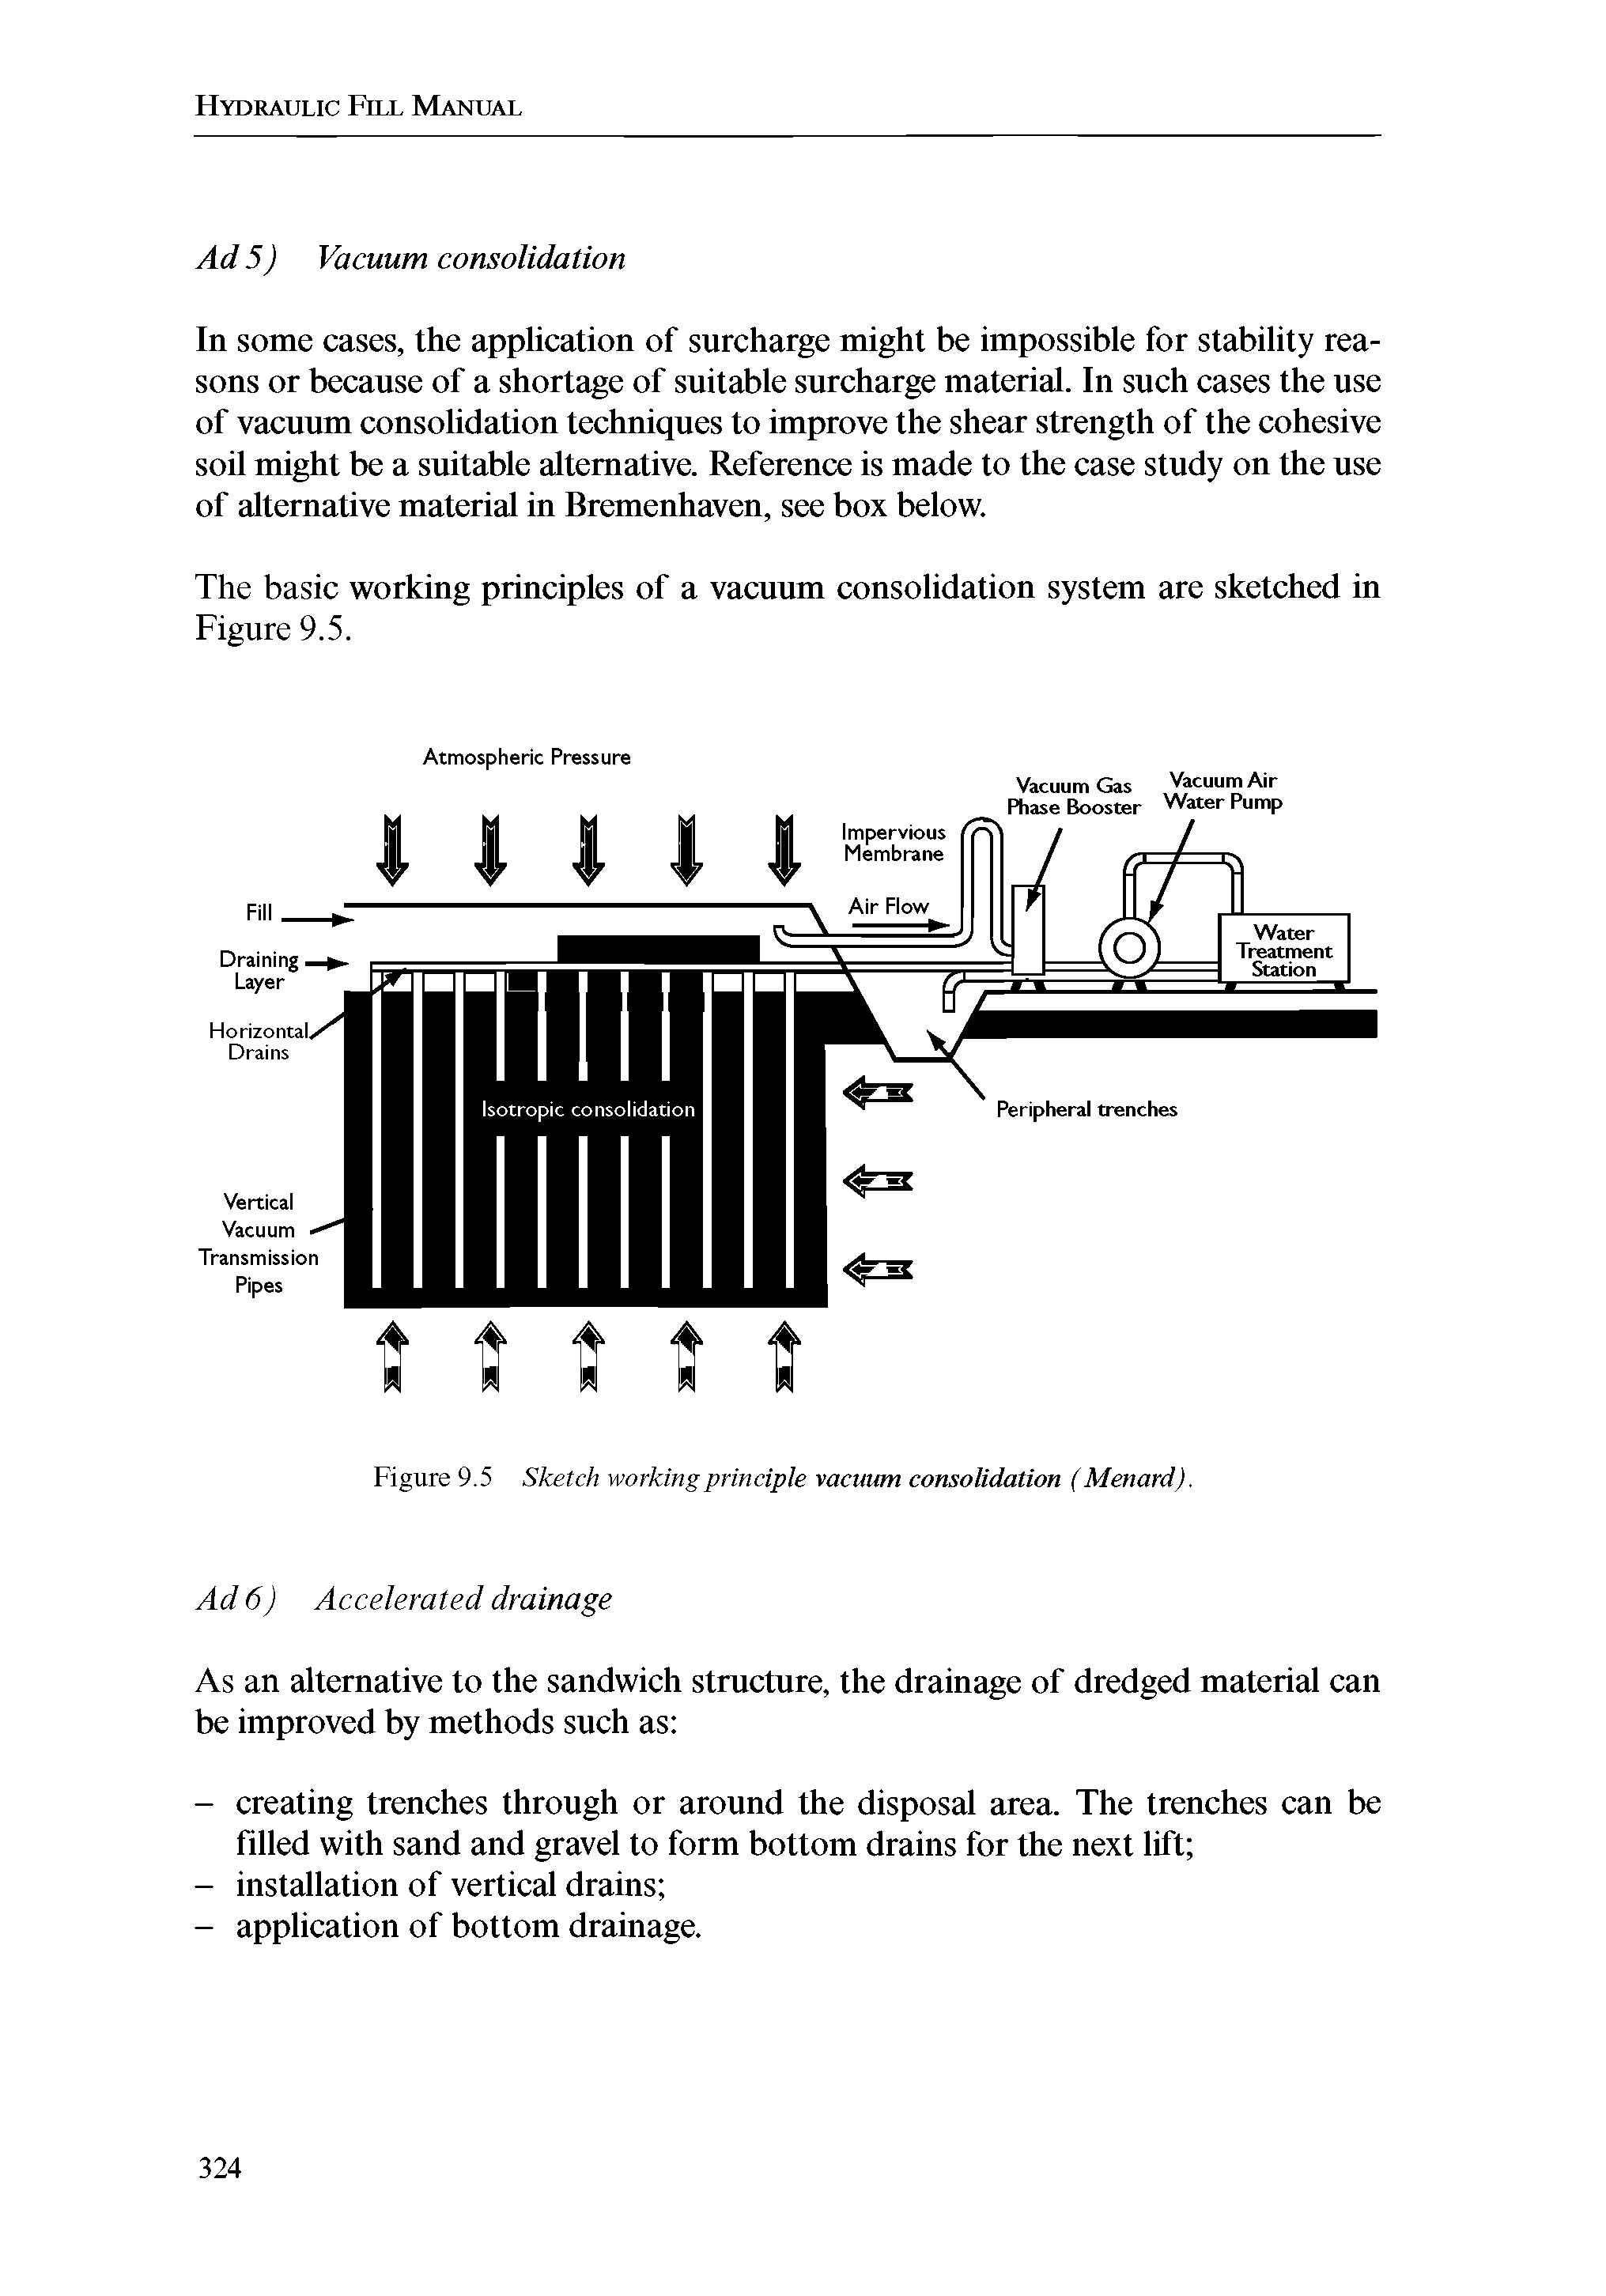 Figure 9.5 Sketch working principle vacuum consolidation (Menard).